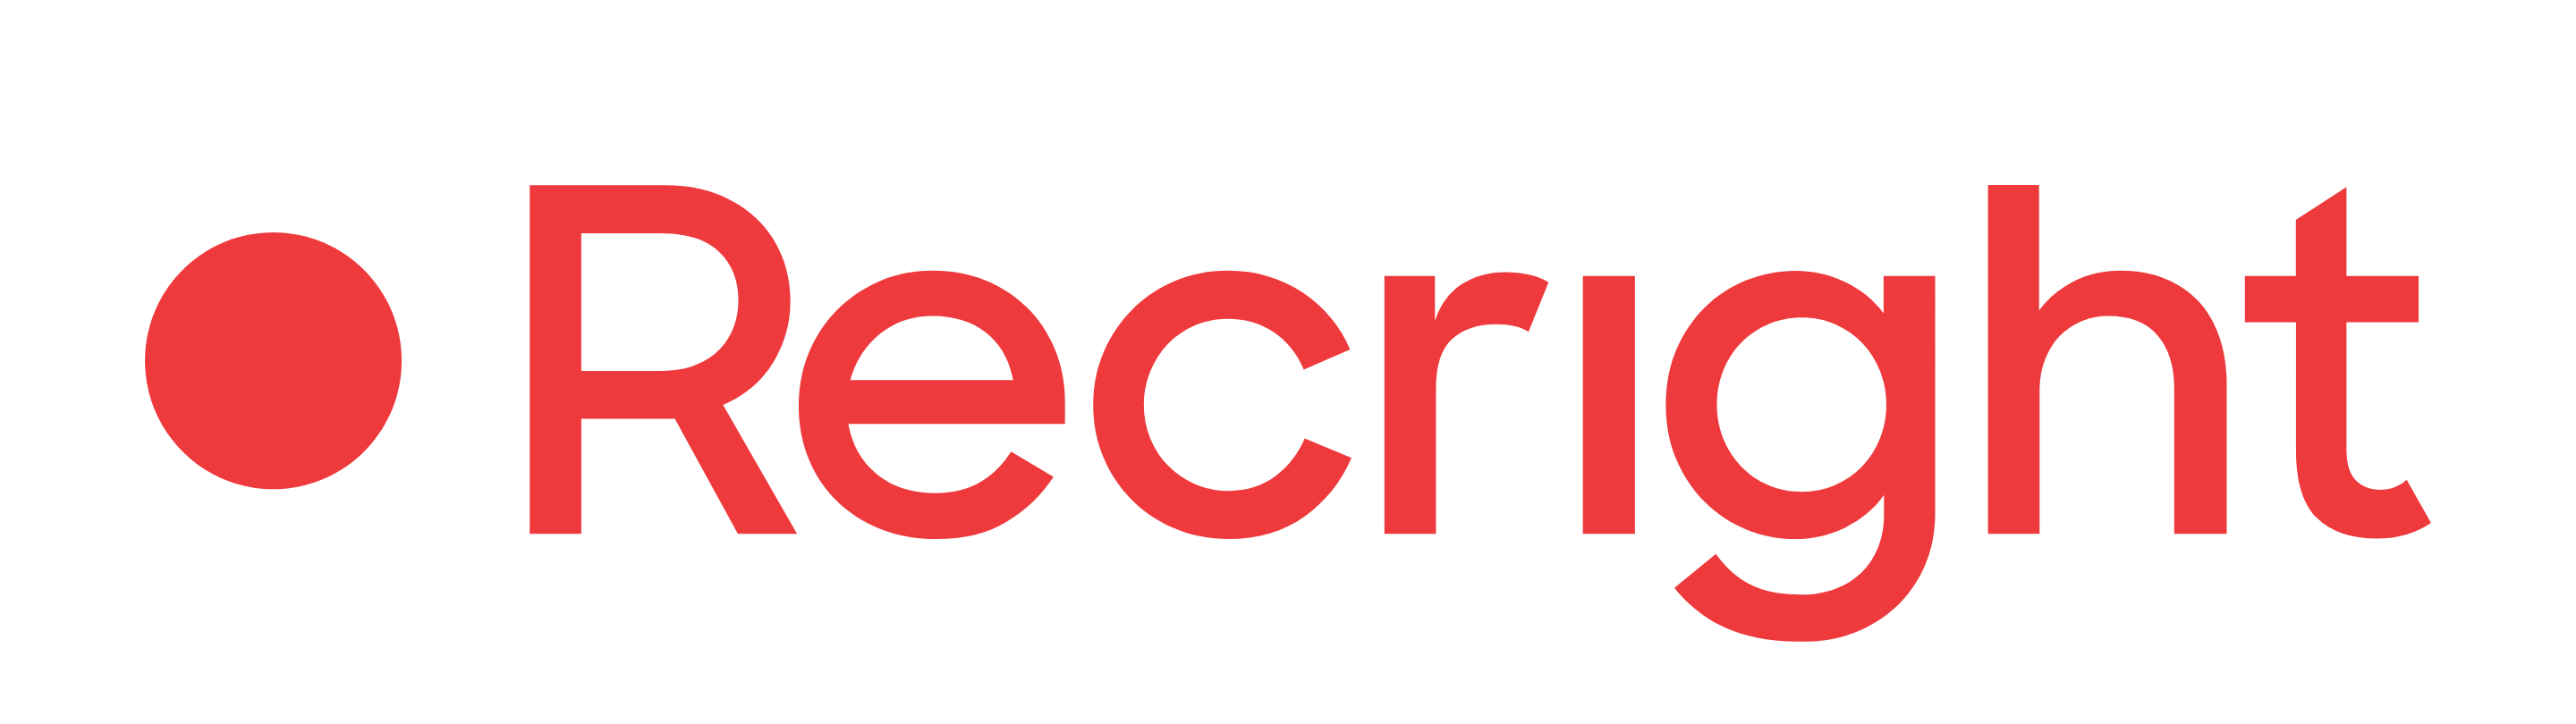 RecRight-logo